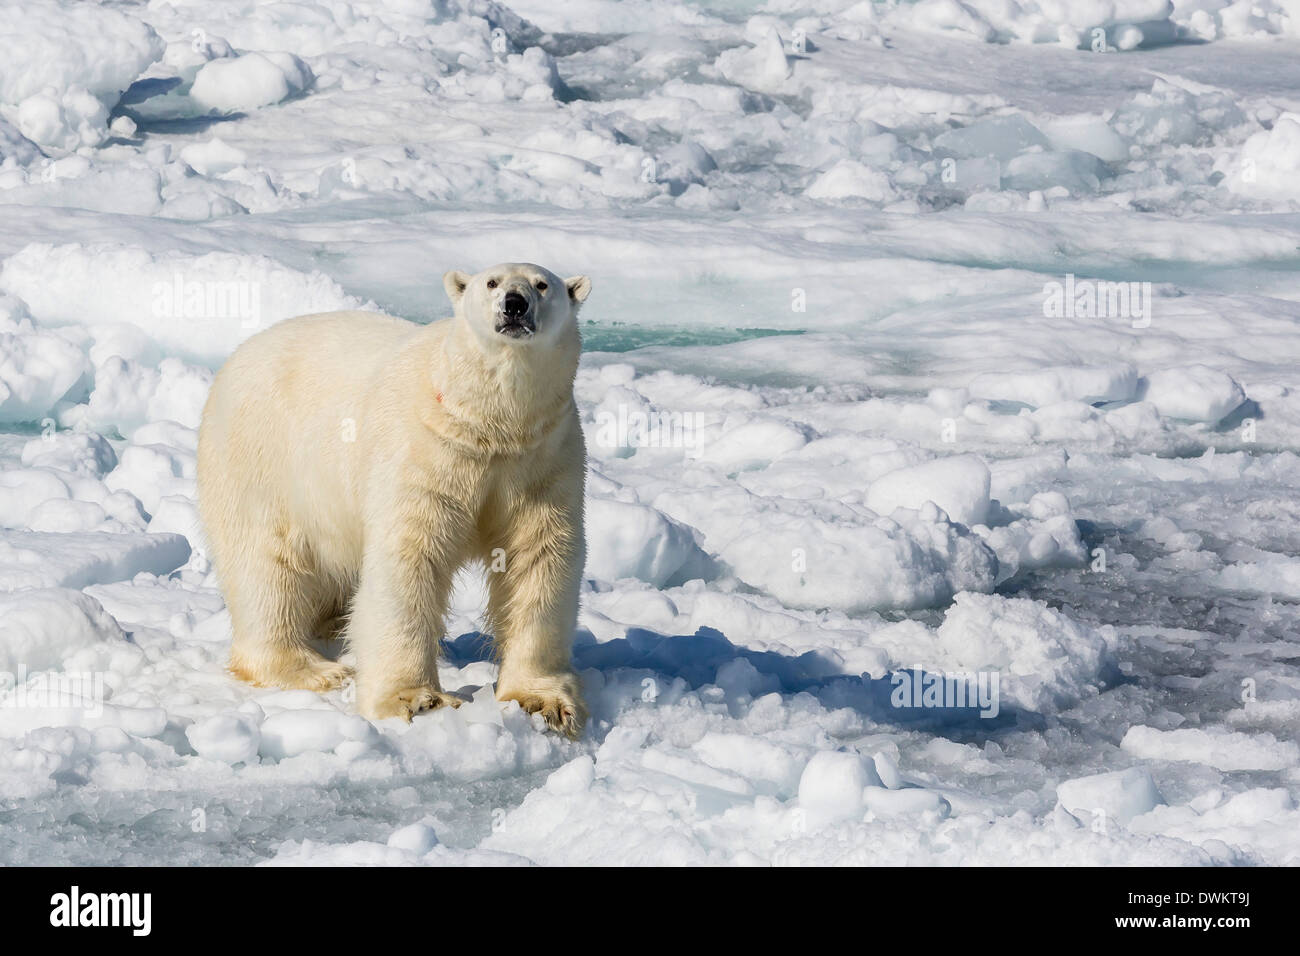 Adult polar bear (Ursus maritimus) on ice floes, Cumberland Peninsula, Baffin Island, Nunavut, Canada, North America Stock Photo